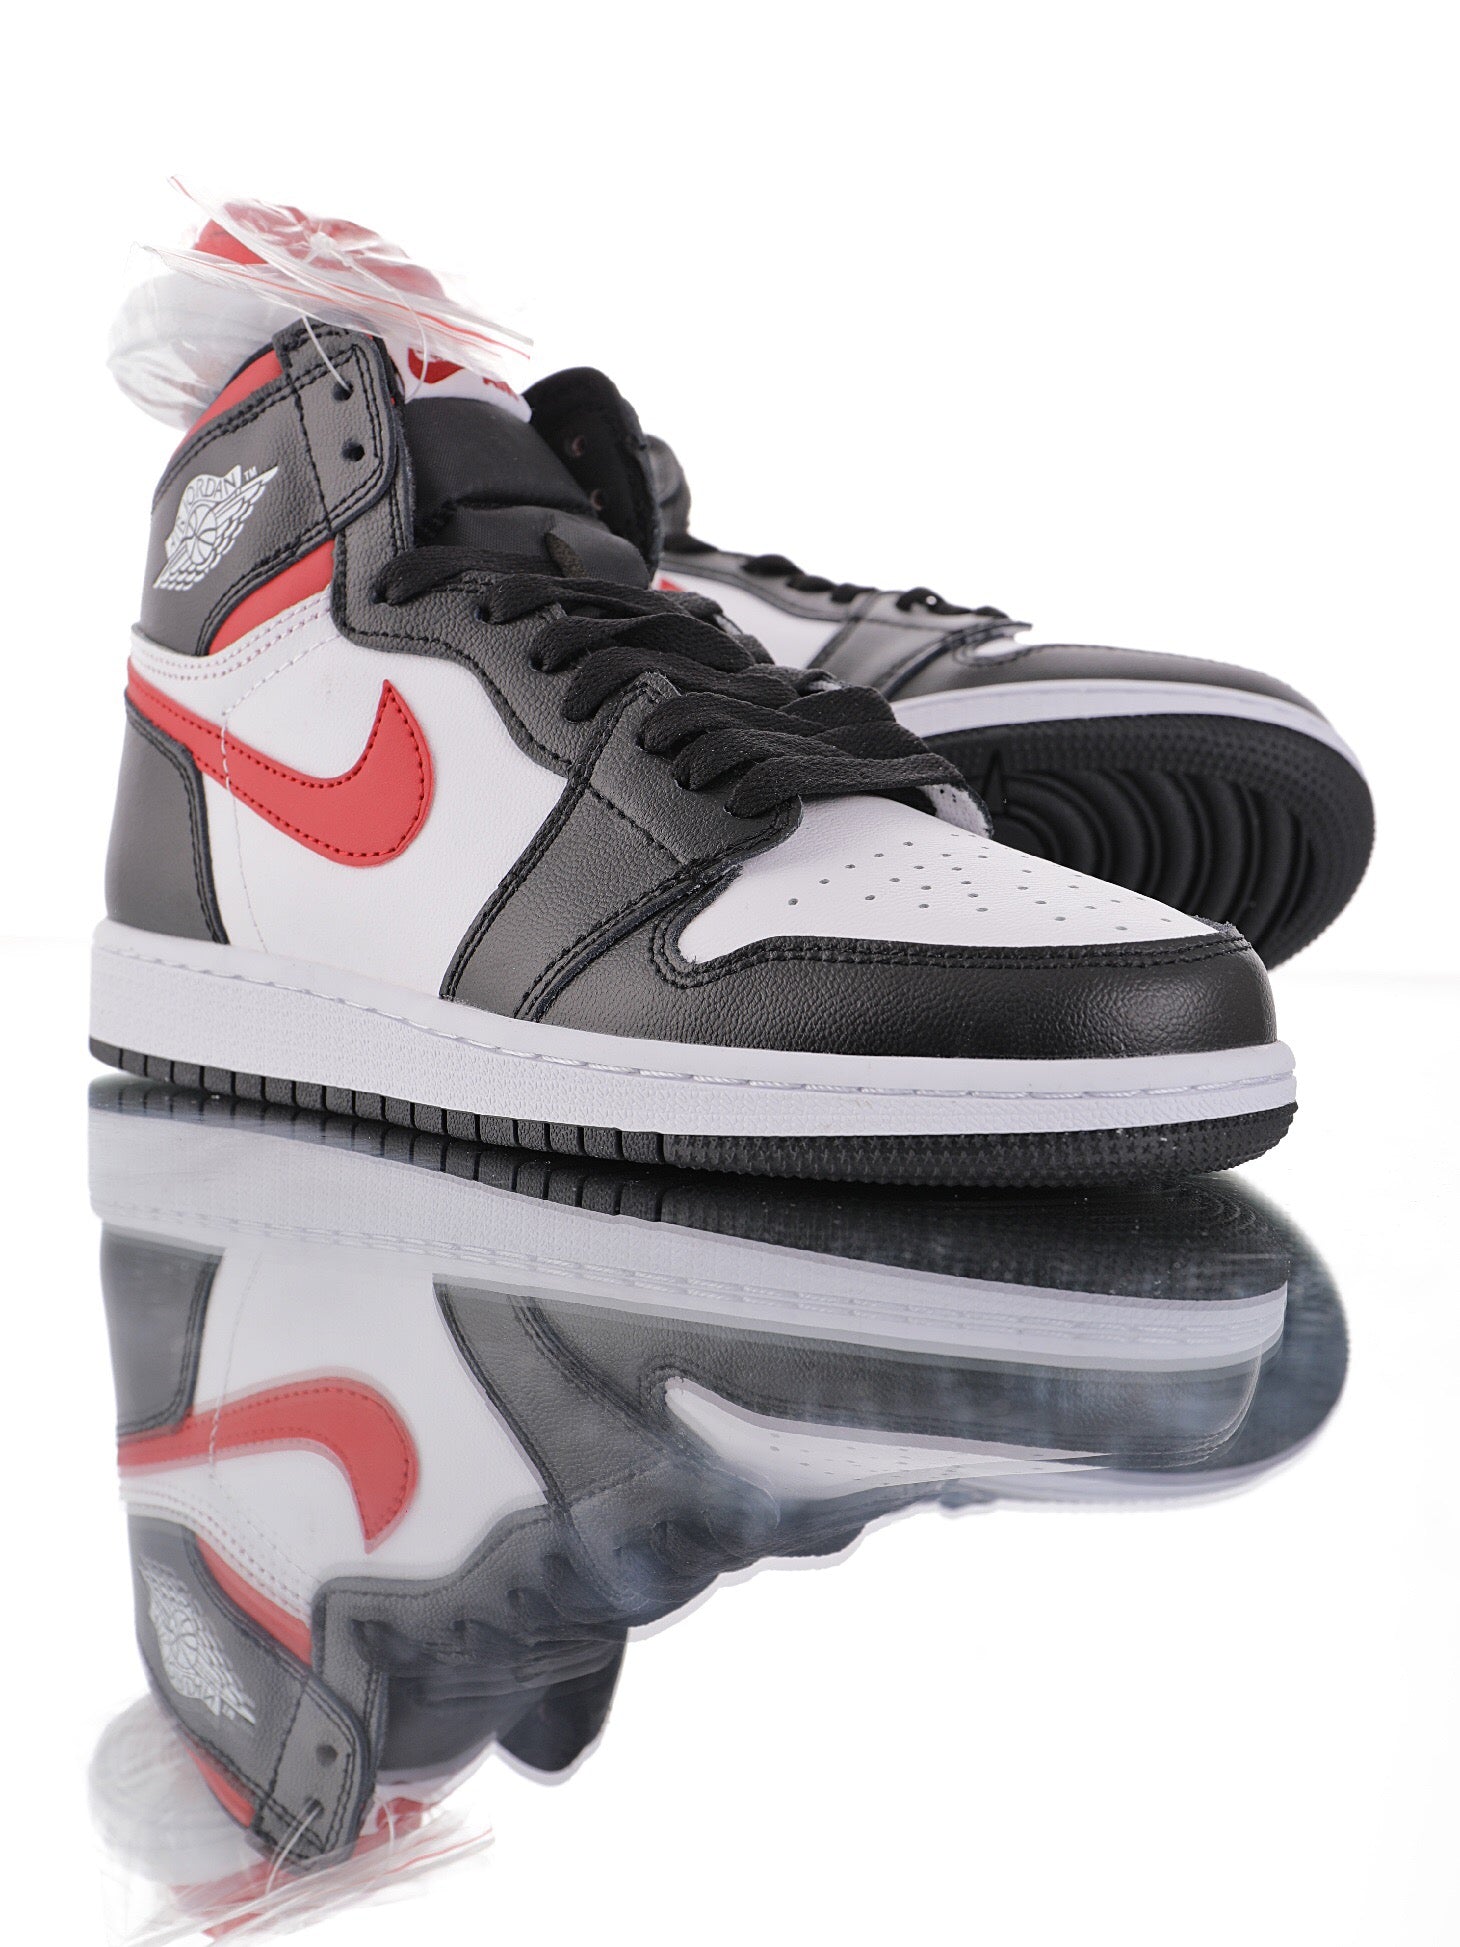 Nike Air Jordan 1 Gym Red Sneakers Shoes 555088-061